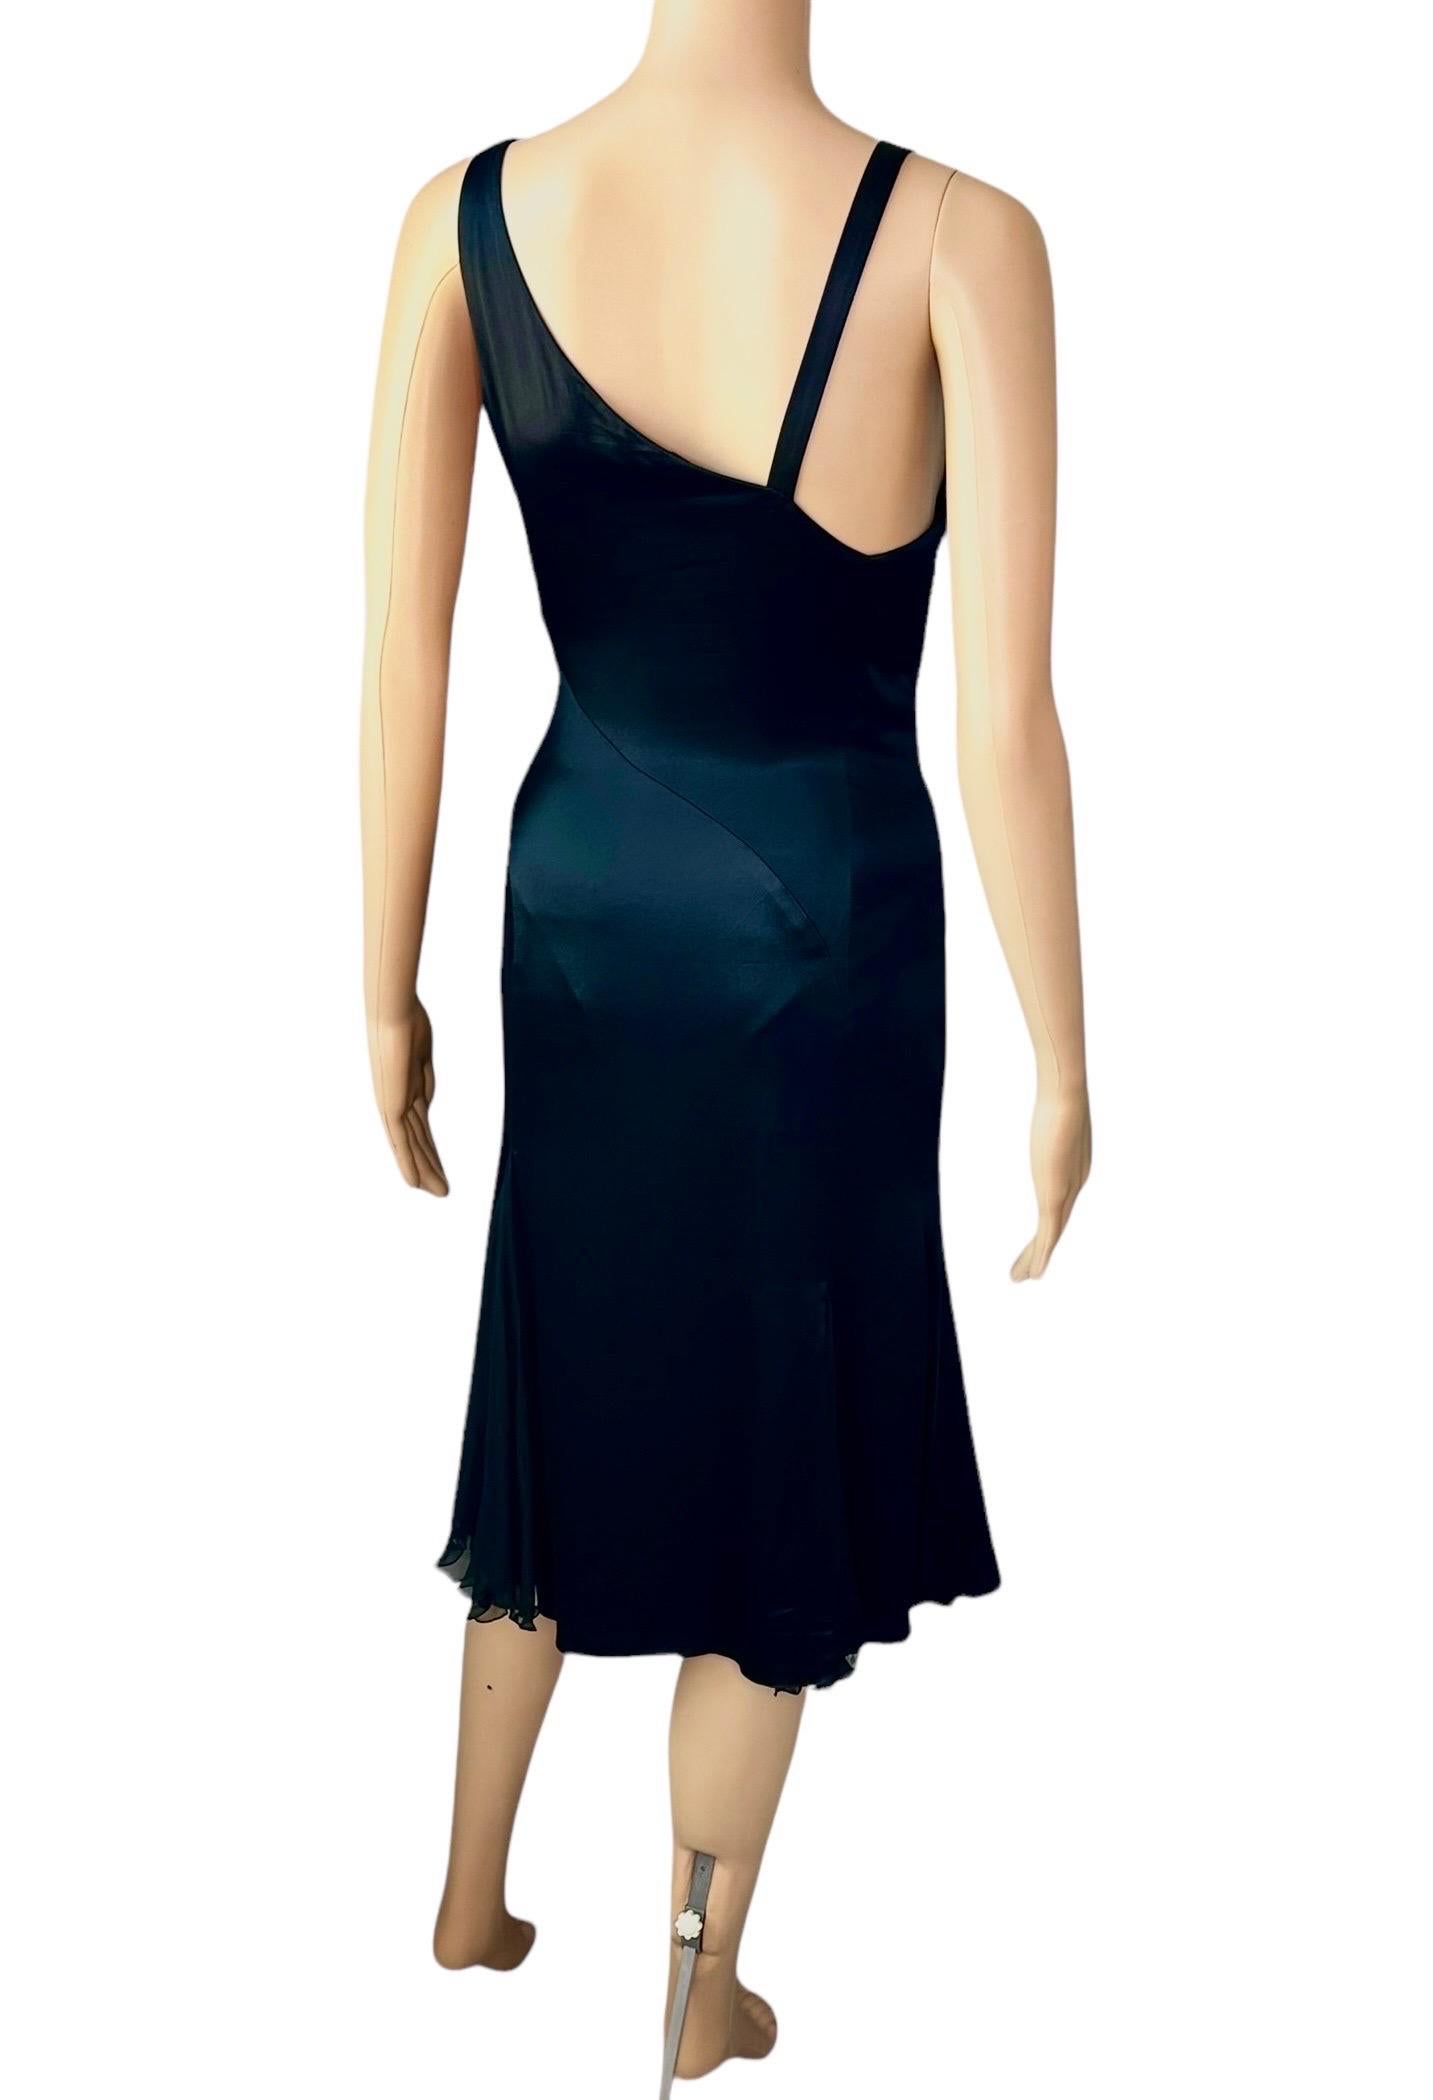 Versace F/W 2004 Embellished Buckle Studded Detail Plunging Black Evening Dress For Sale 3